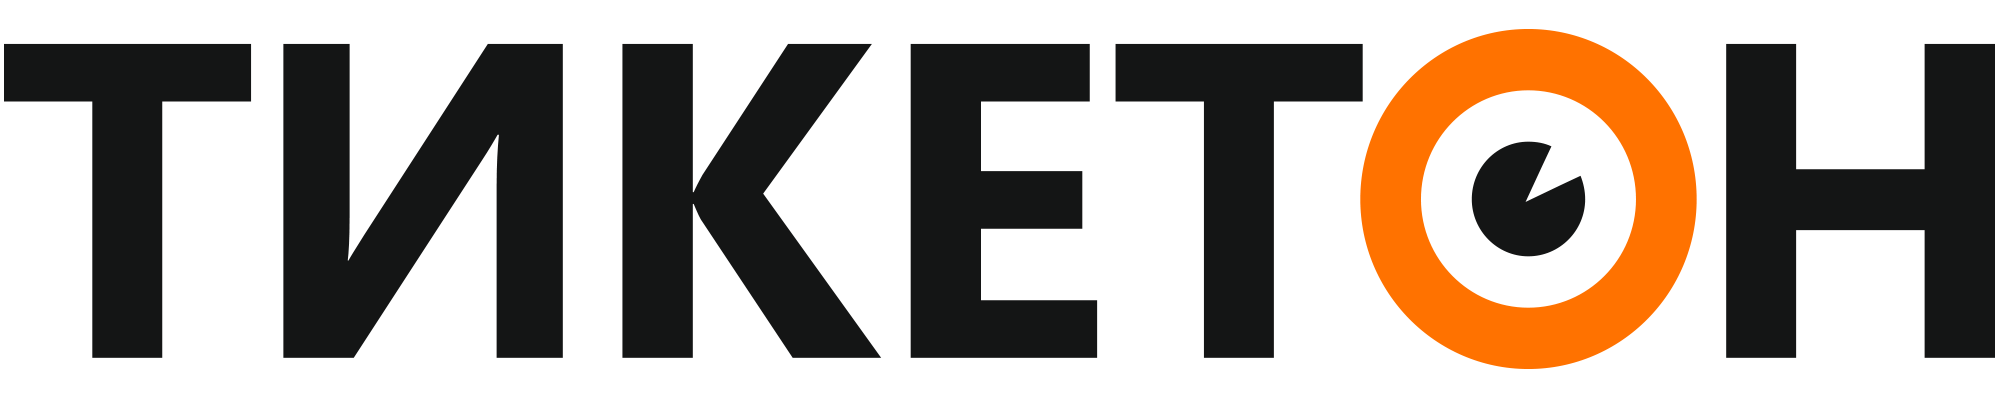 Kzsq kz. Тикетон. Тикетон Астана. Logo Tiketon. Ticketon.kz PNG.